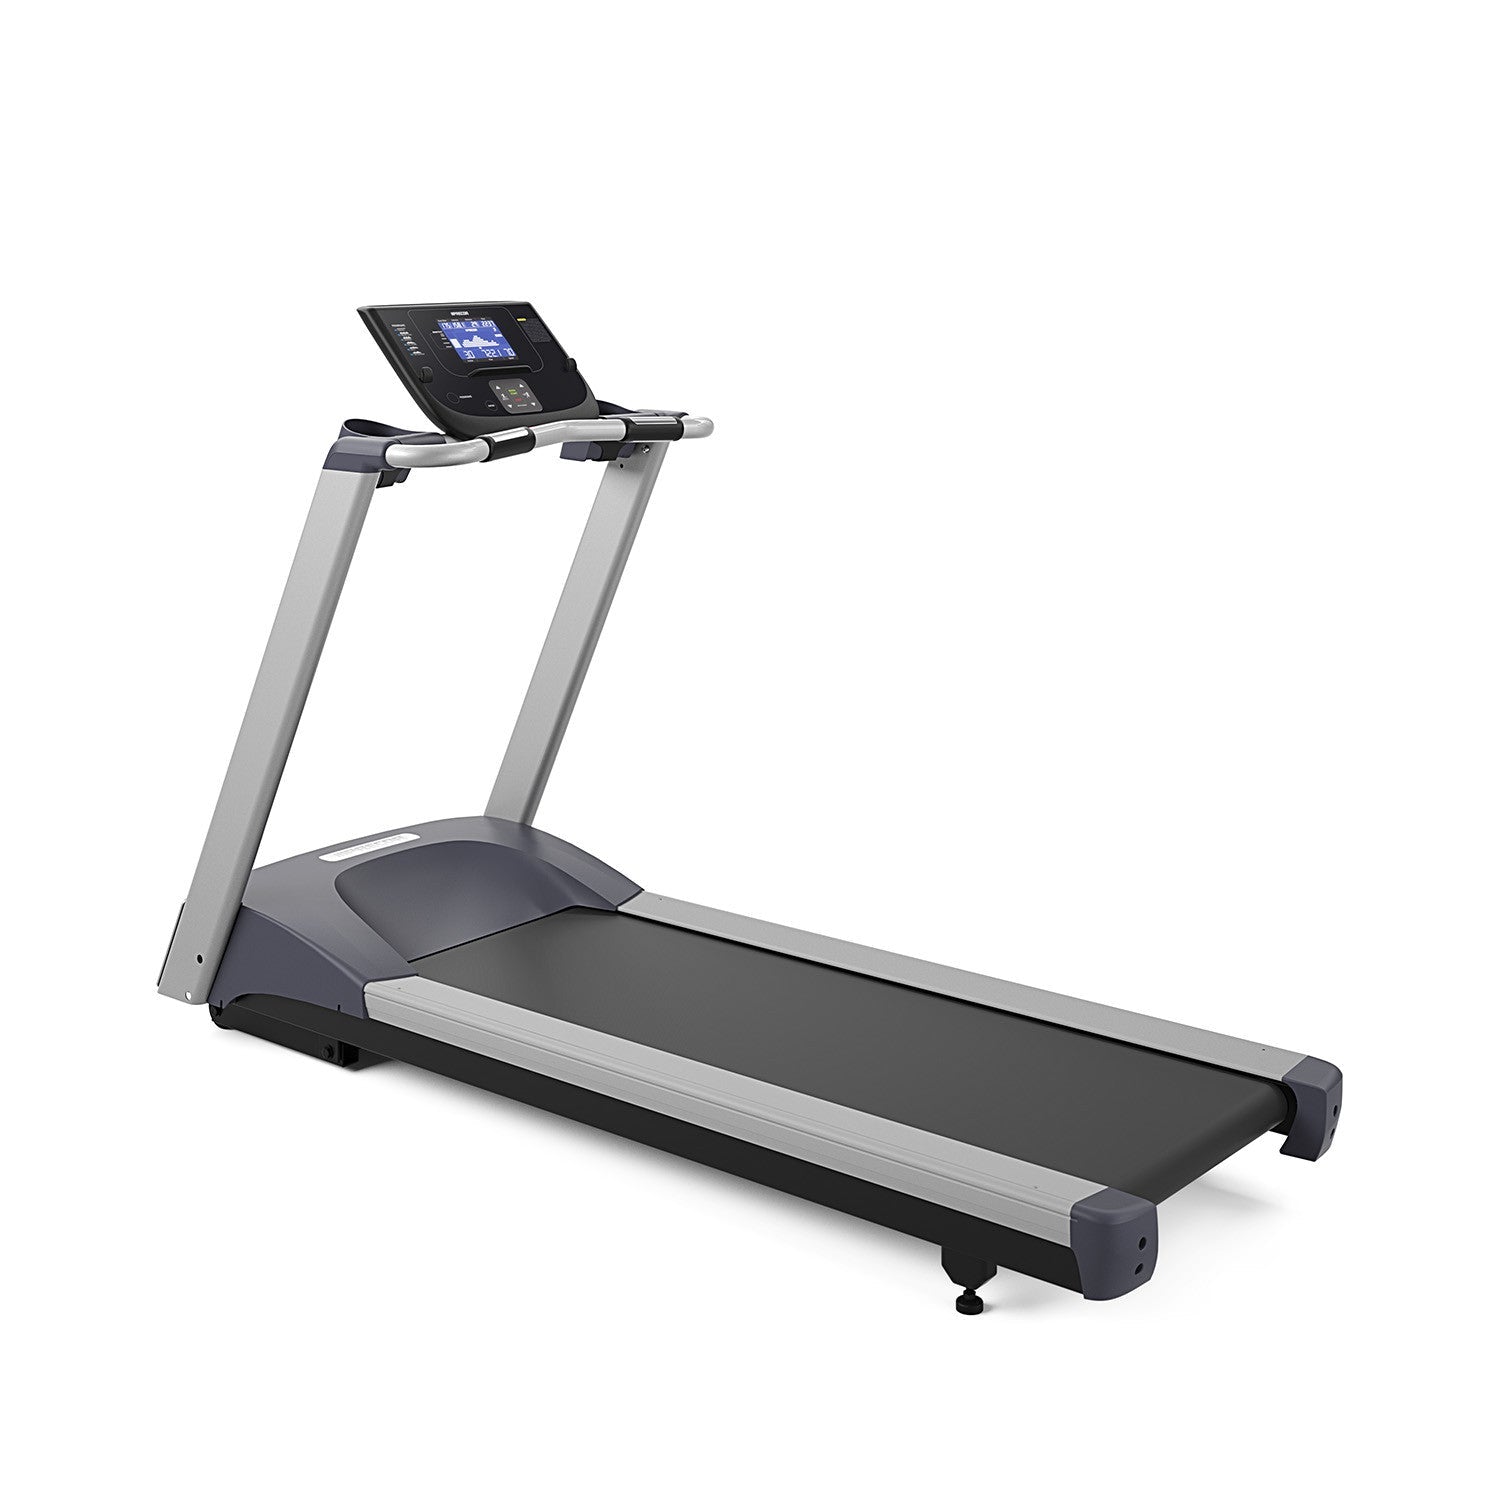 Precor TRM211 Treadmill, featuring maintenance free running deck for low treadmill maintenance. 